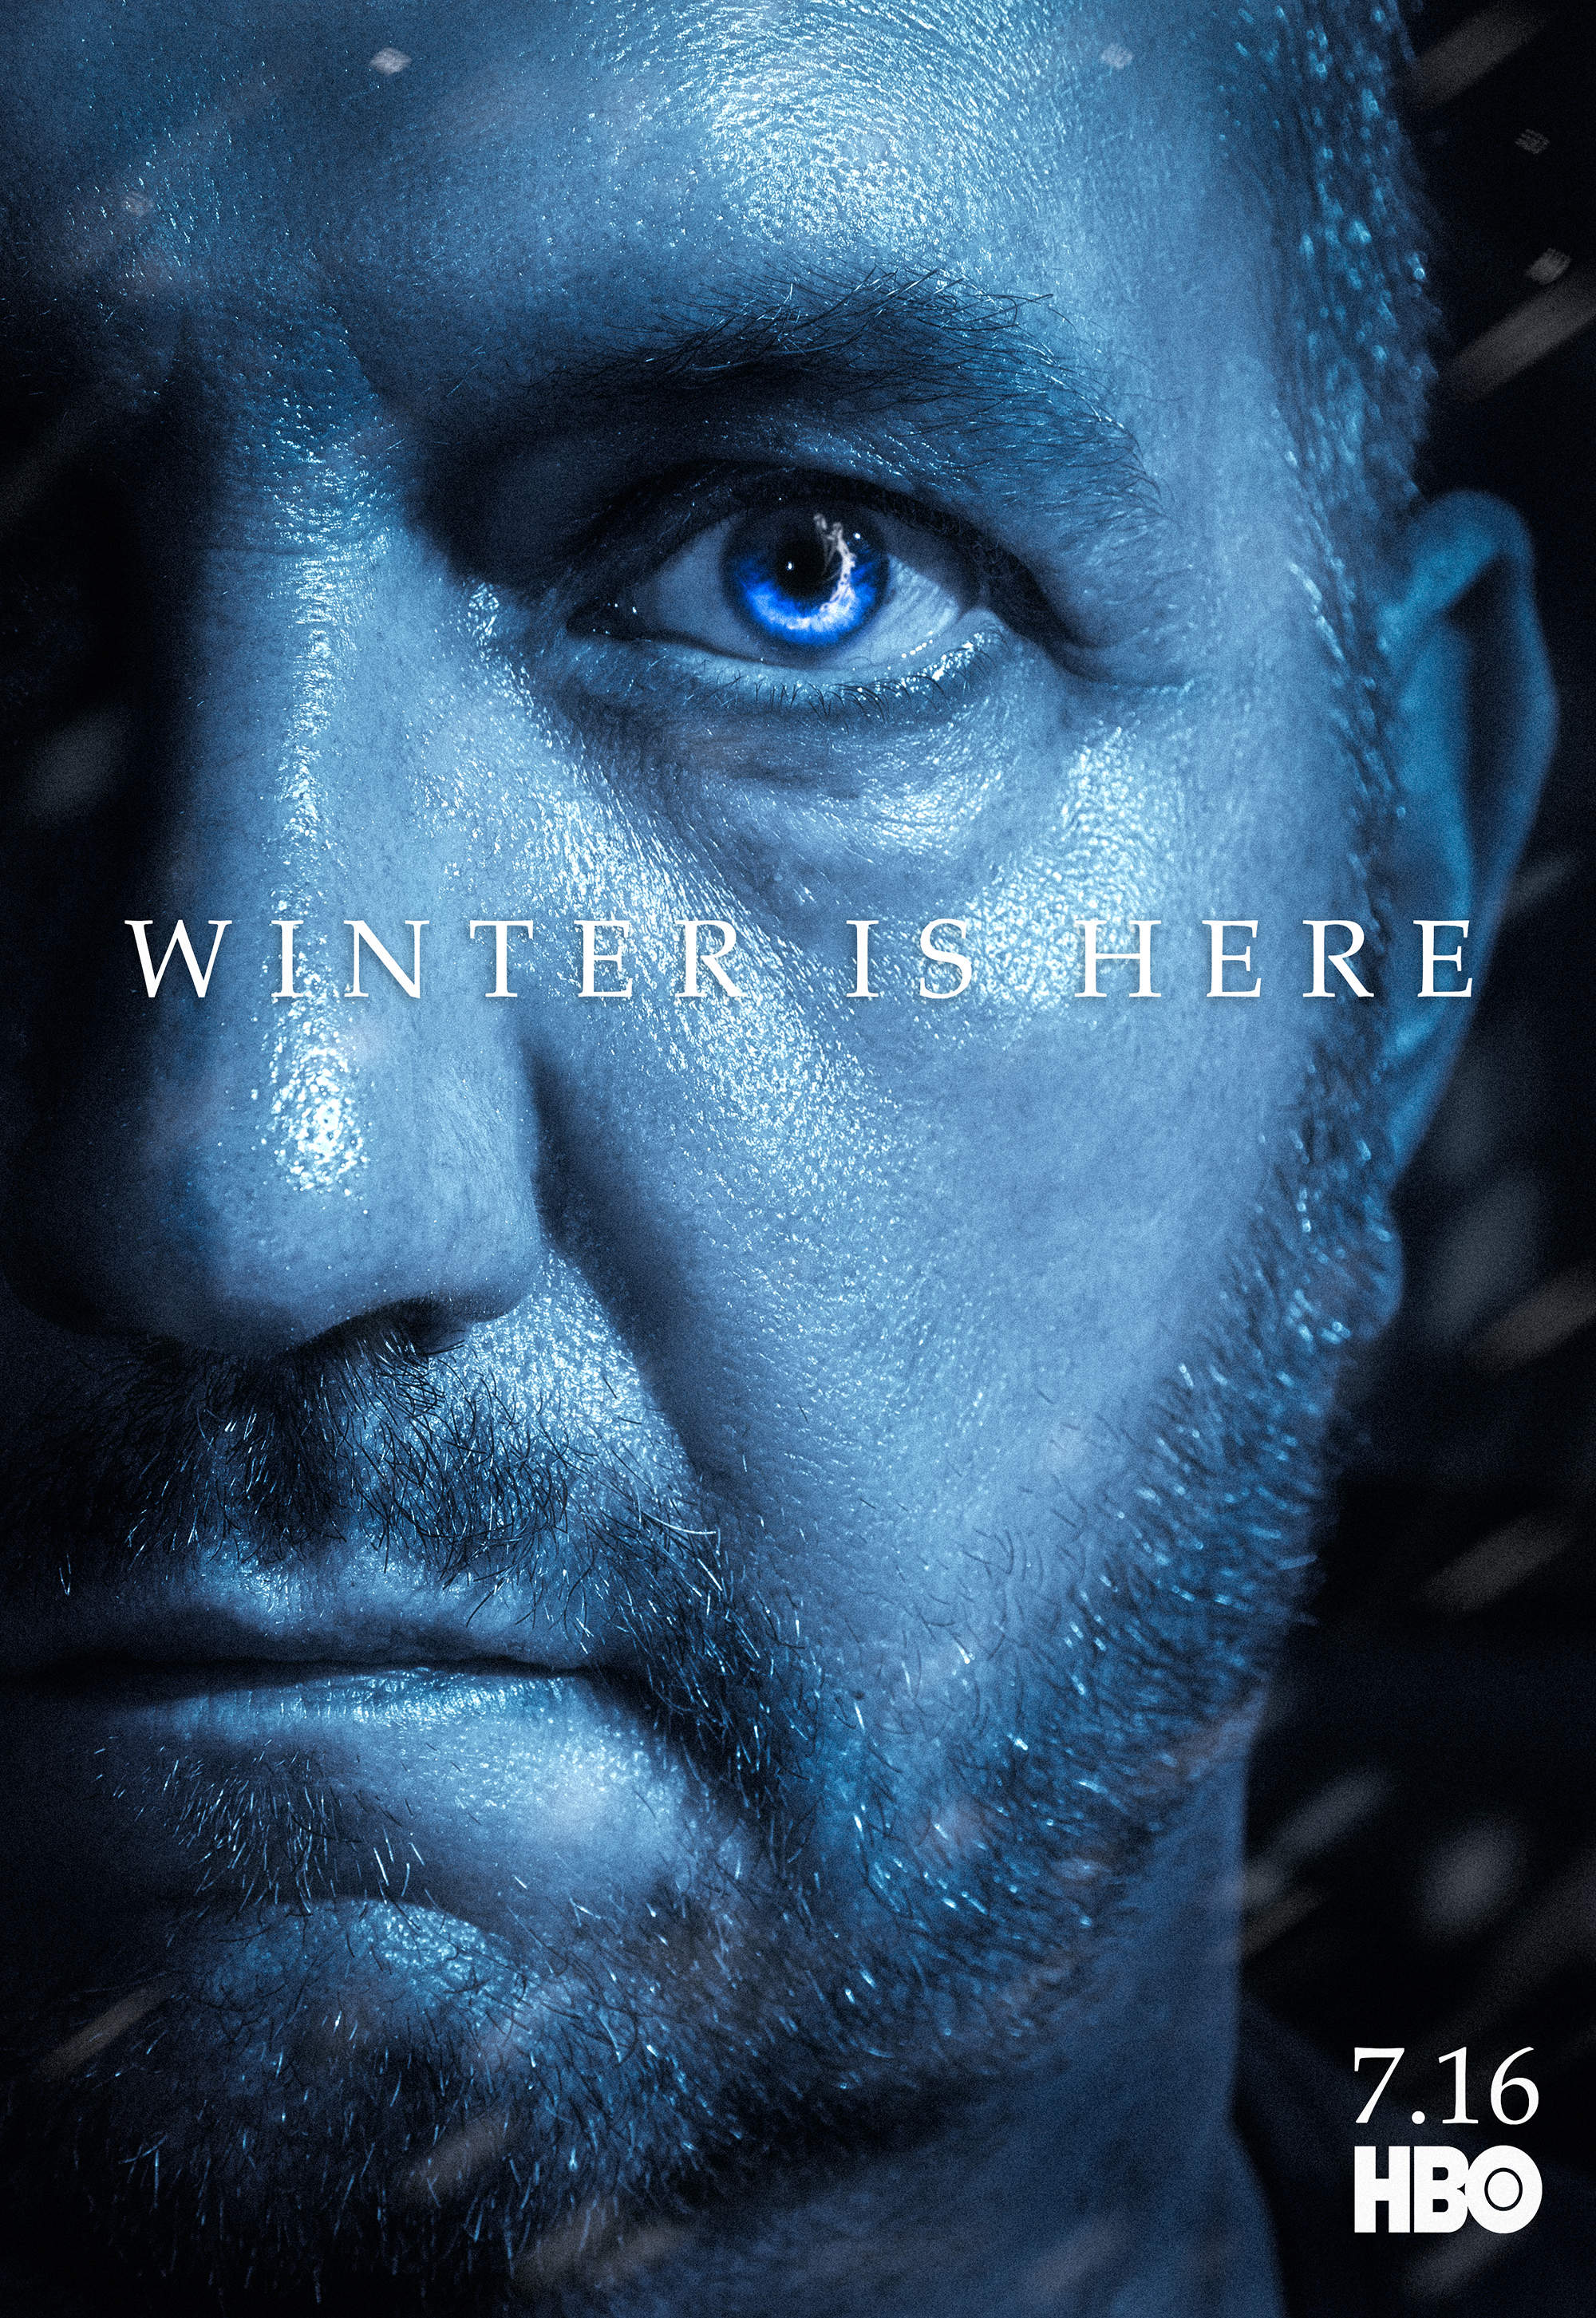 Dennis Balje Game of thrones HBO Poster